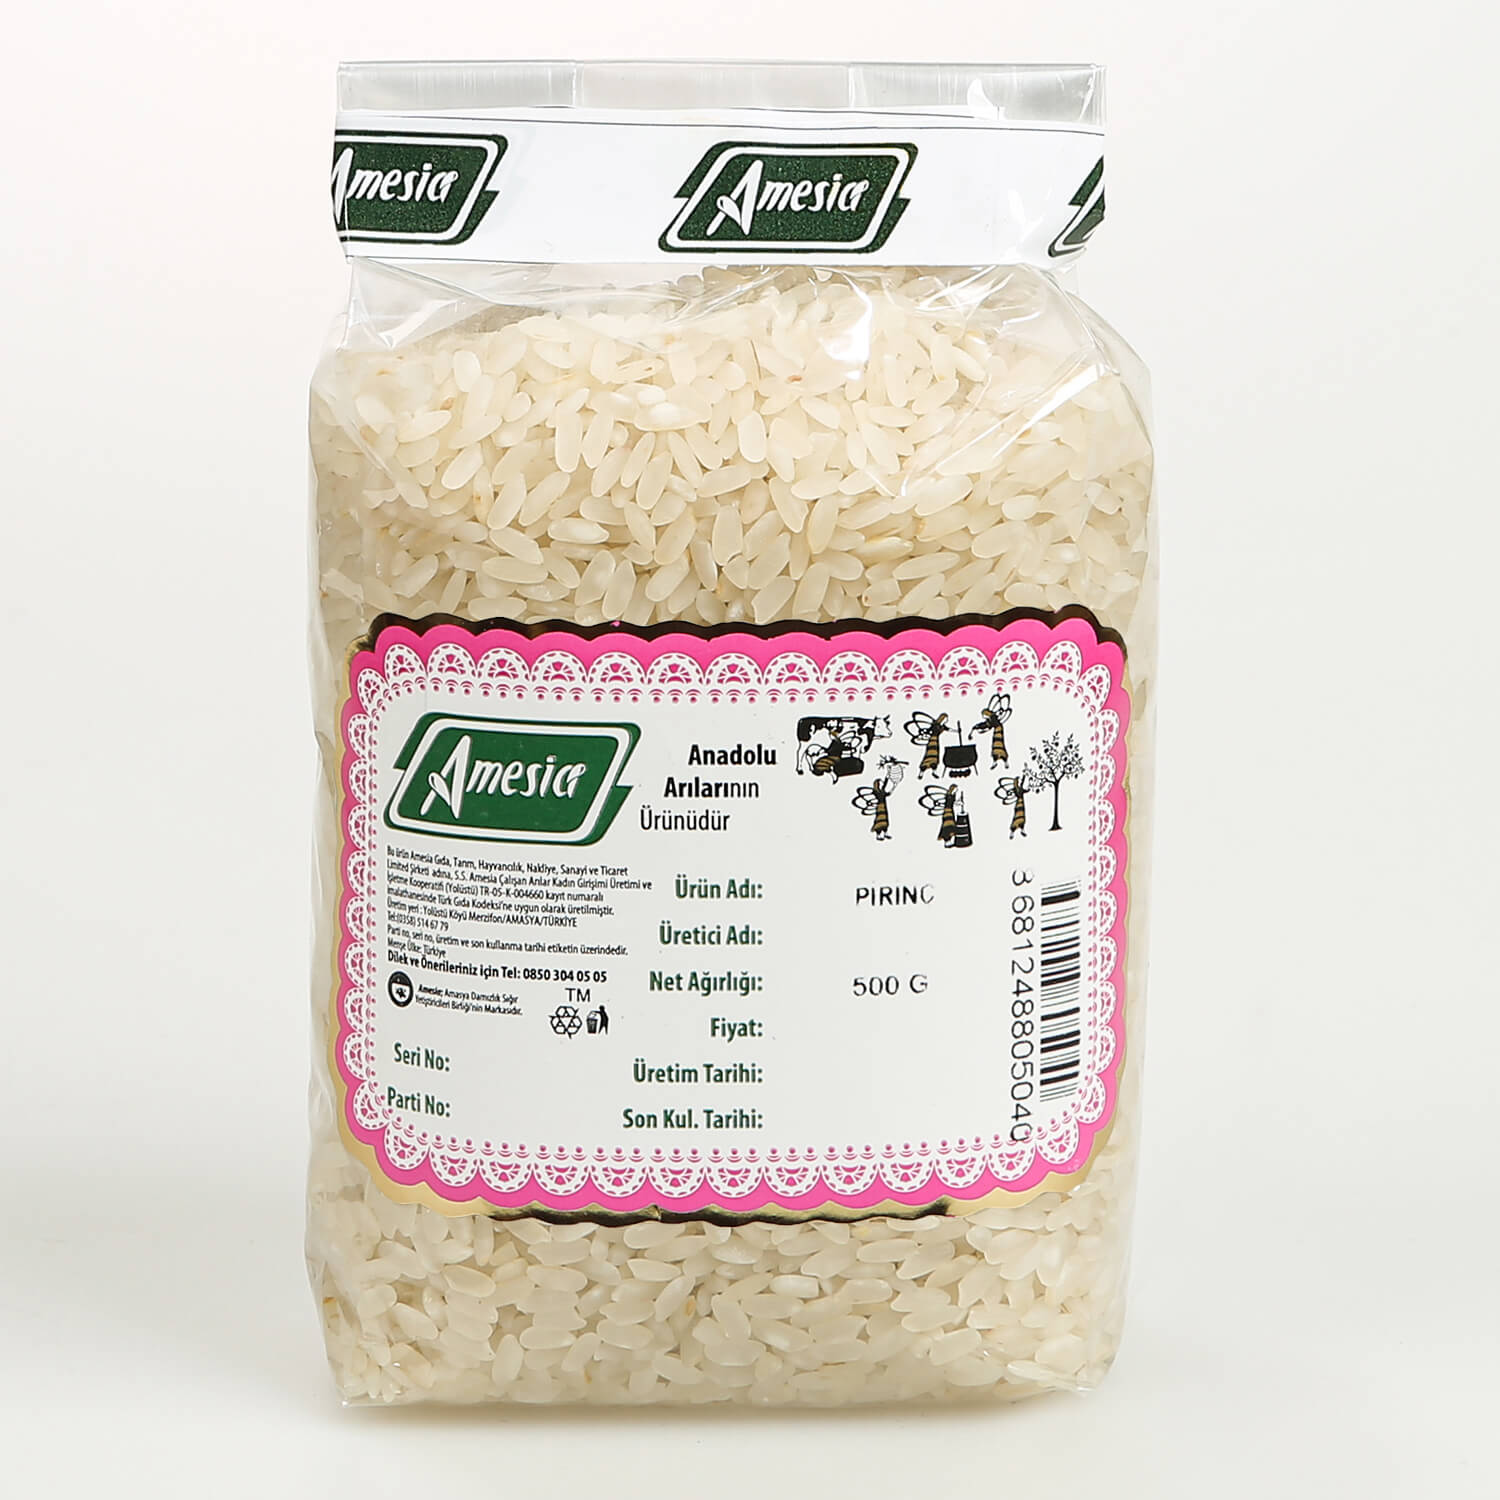 Pirinç 500 G.